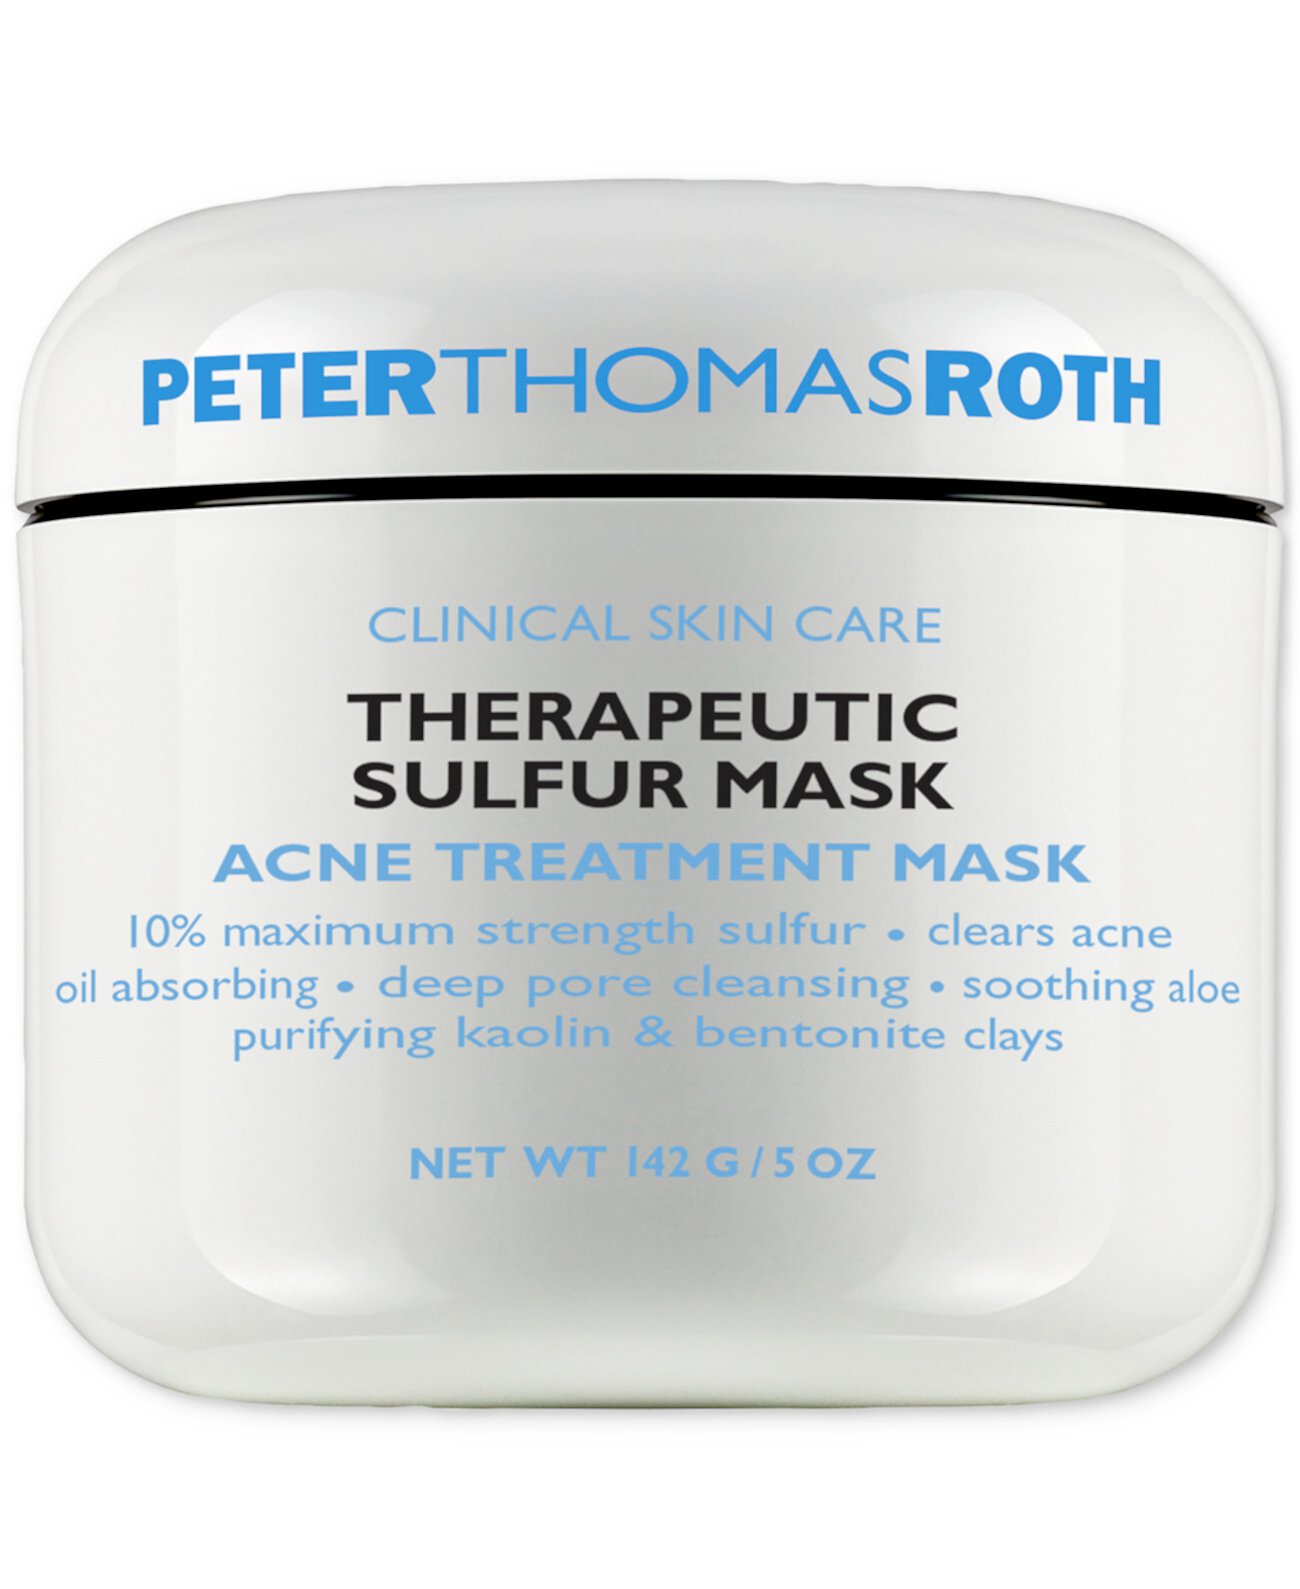 Маска для лечения акне Therapeutic Sulphur Mask, 5 унций. Peter Thomas Roth